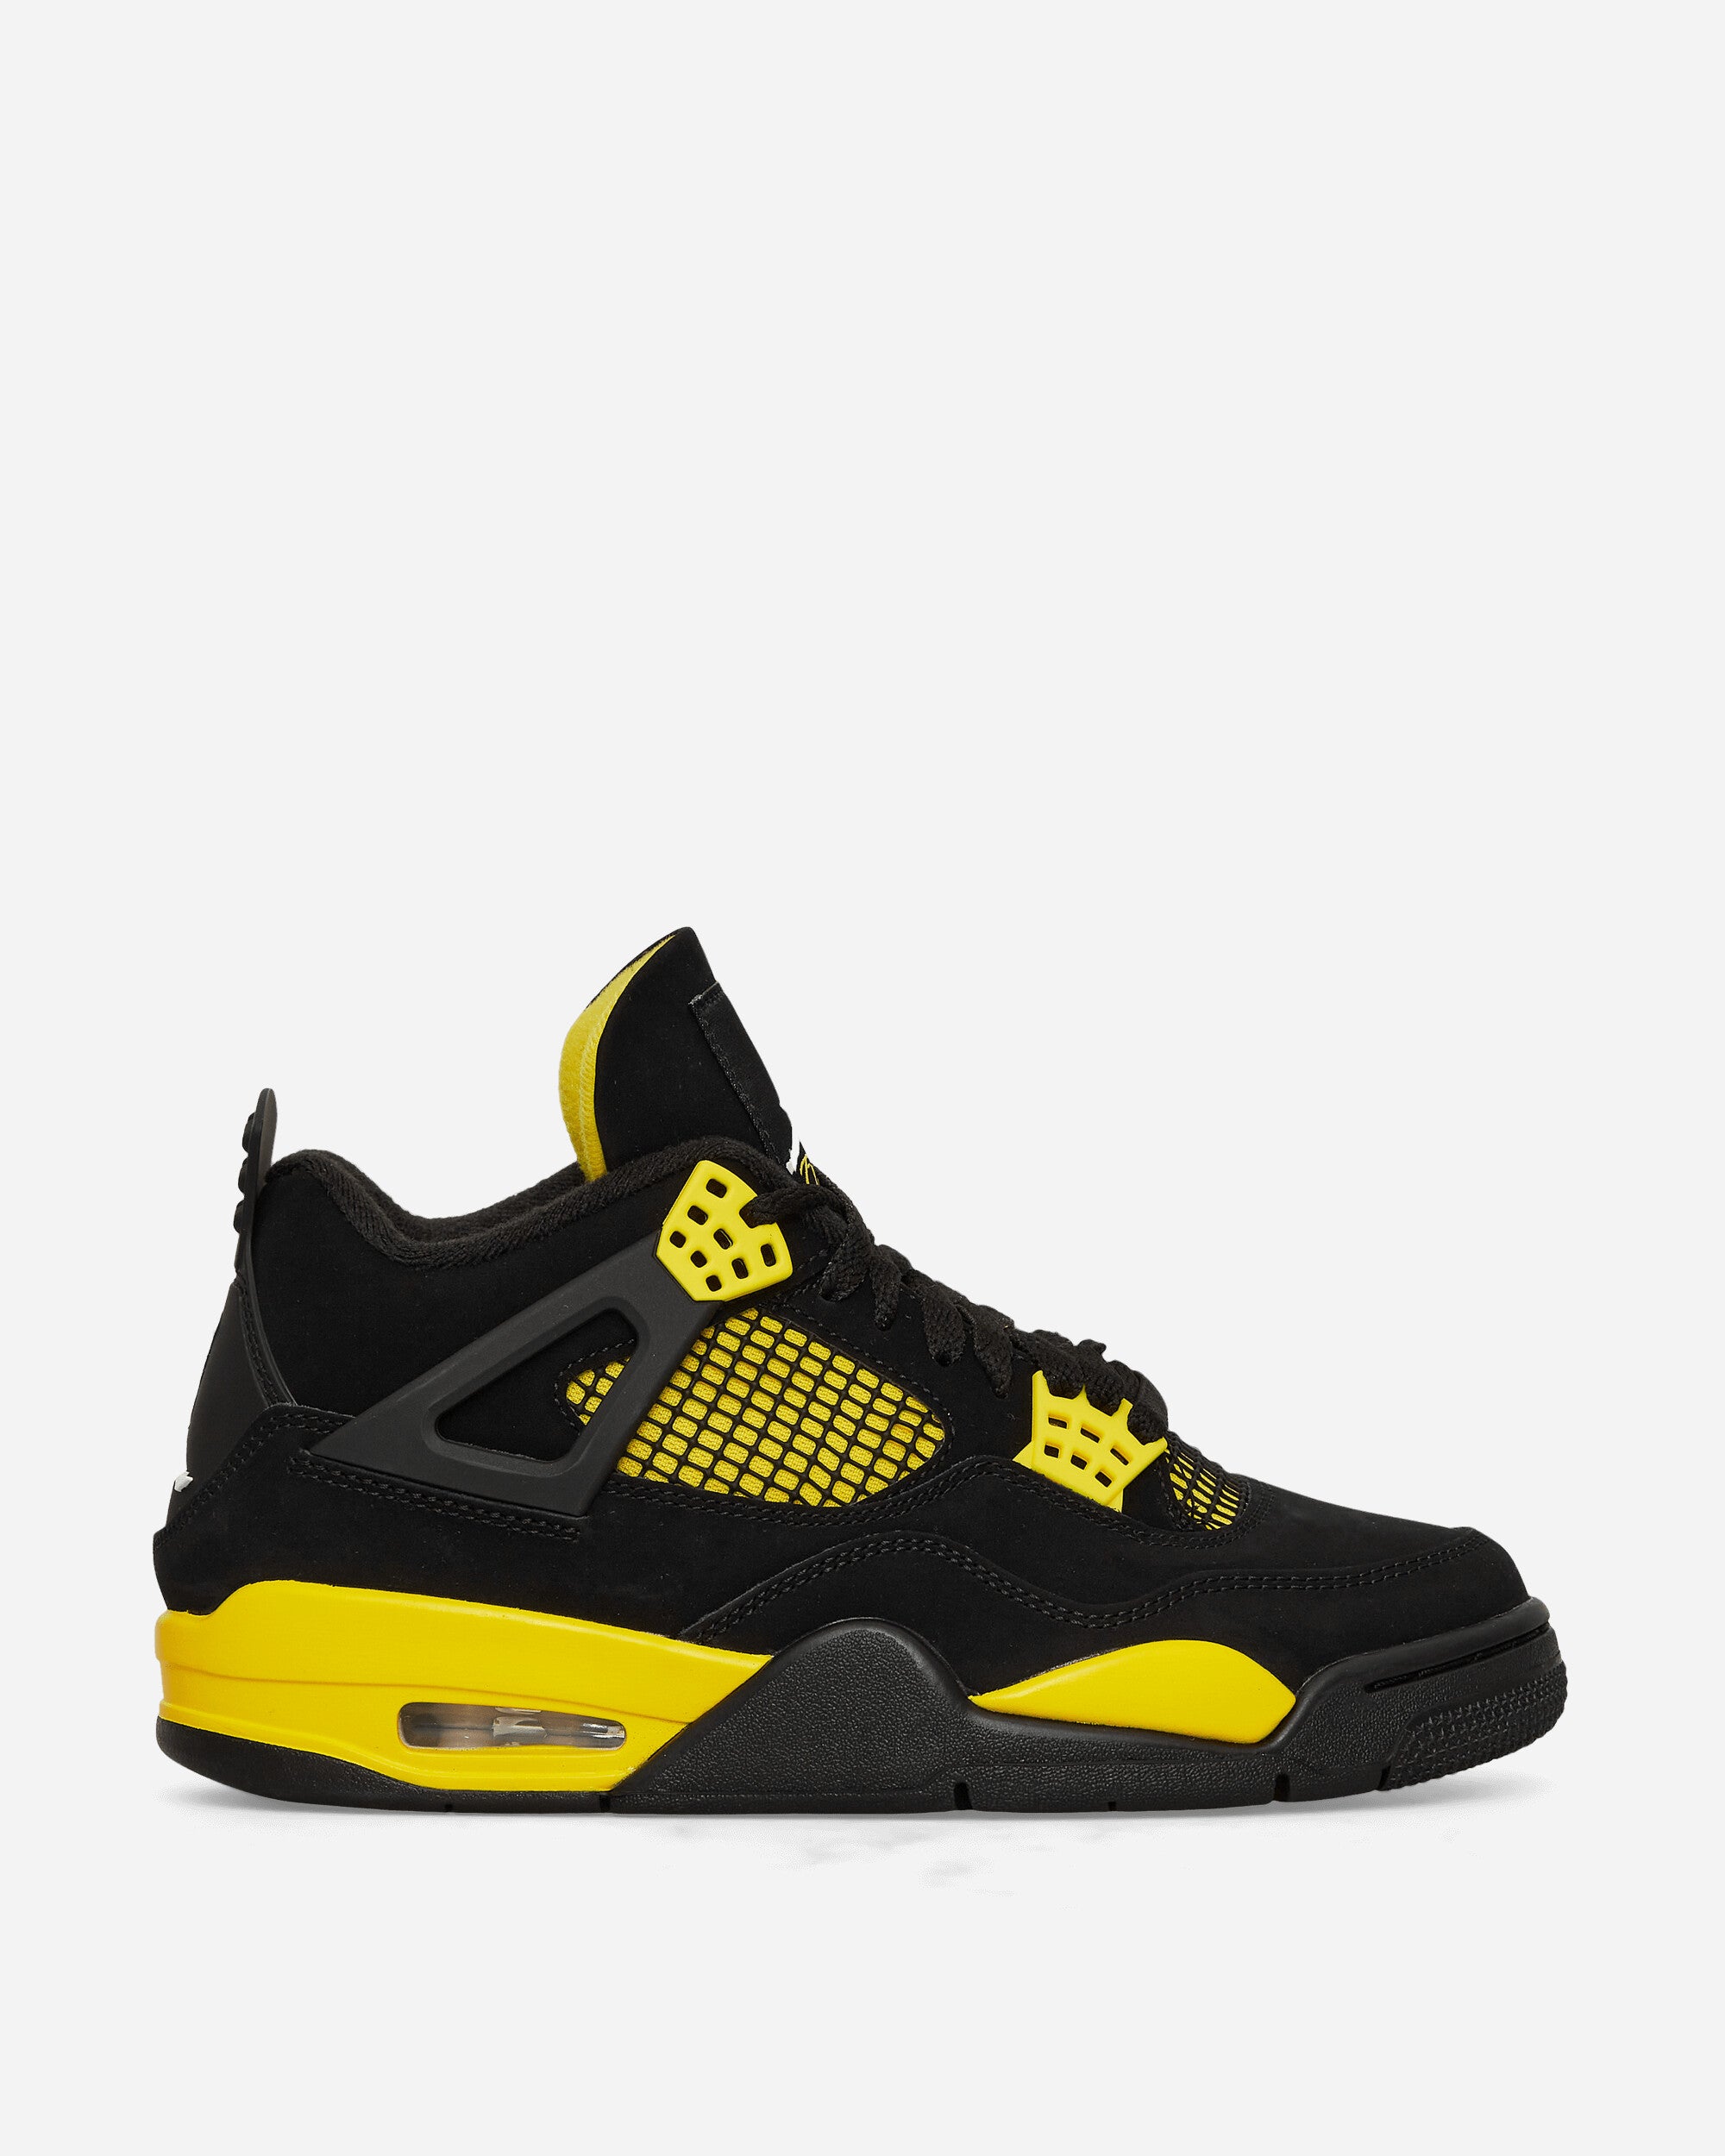 Air Jordan 4 Retro 'Thunder' Sneakers Black / Tour Yellow